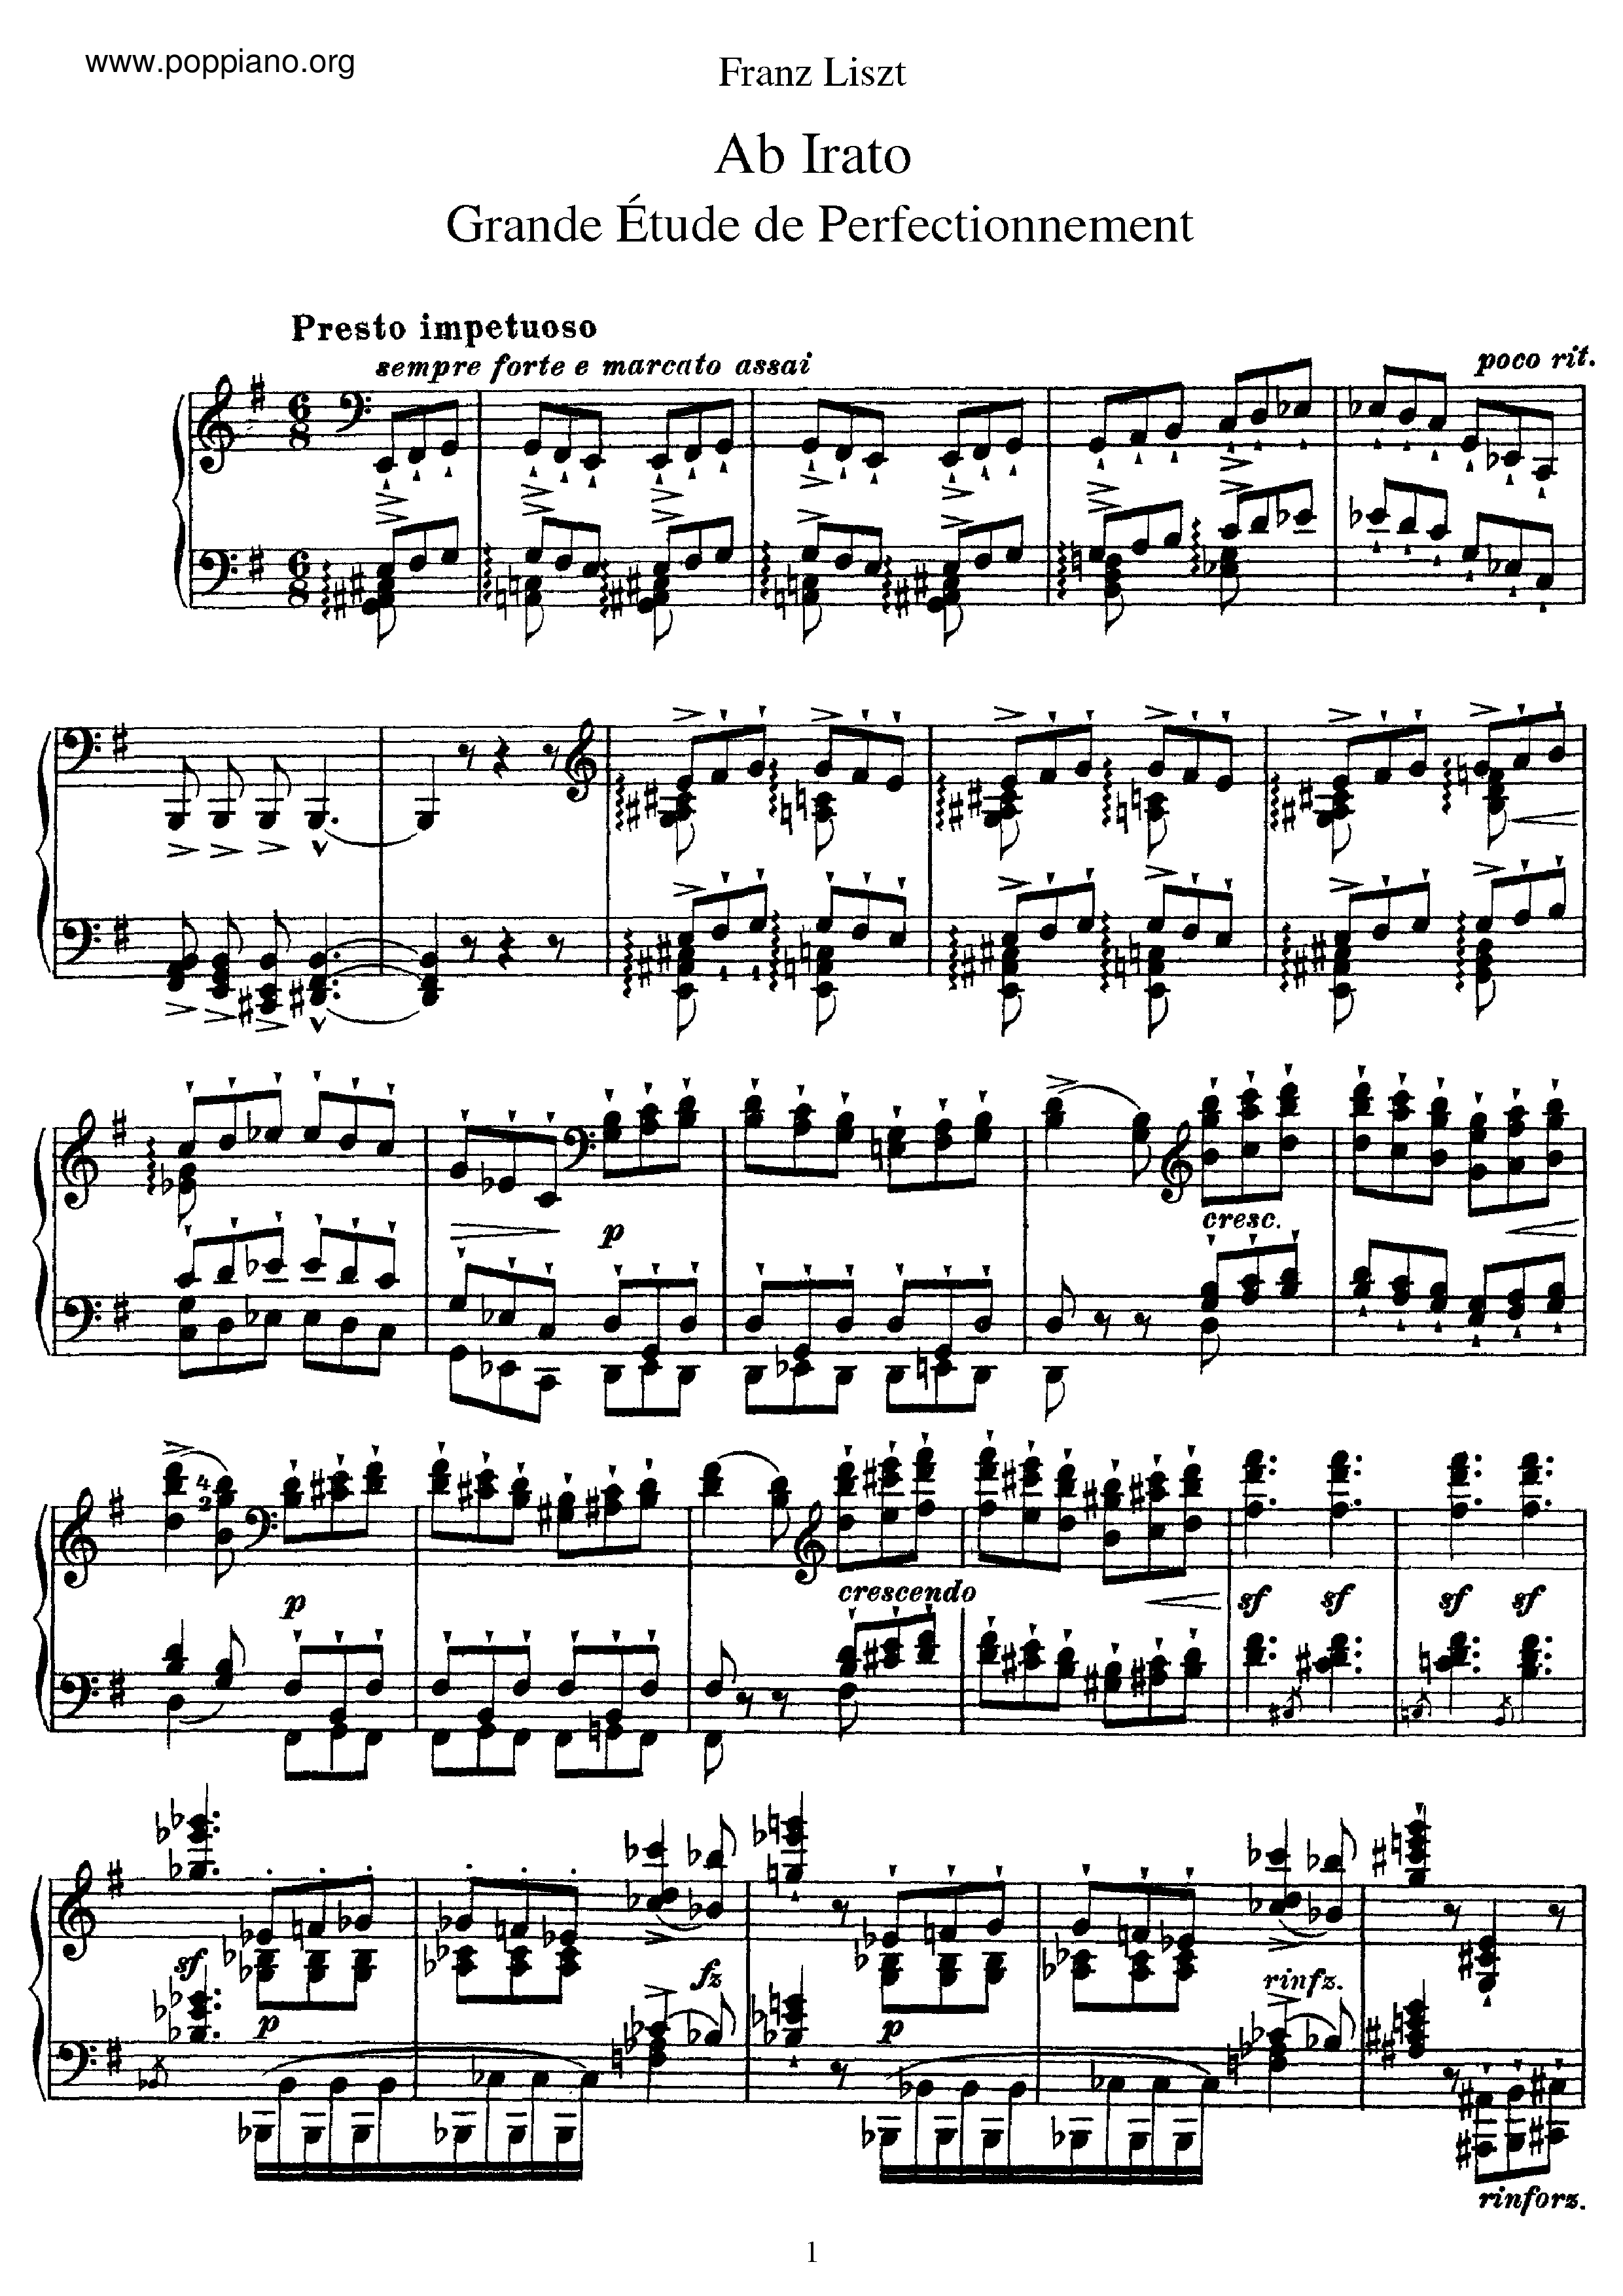 Ab Irato, Etude de perfectionnement, S.143 Score